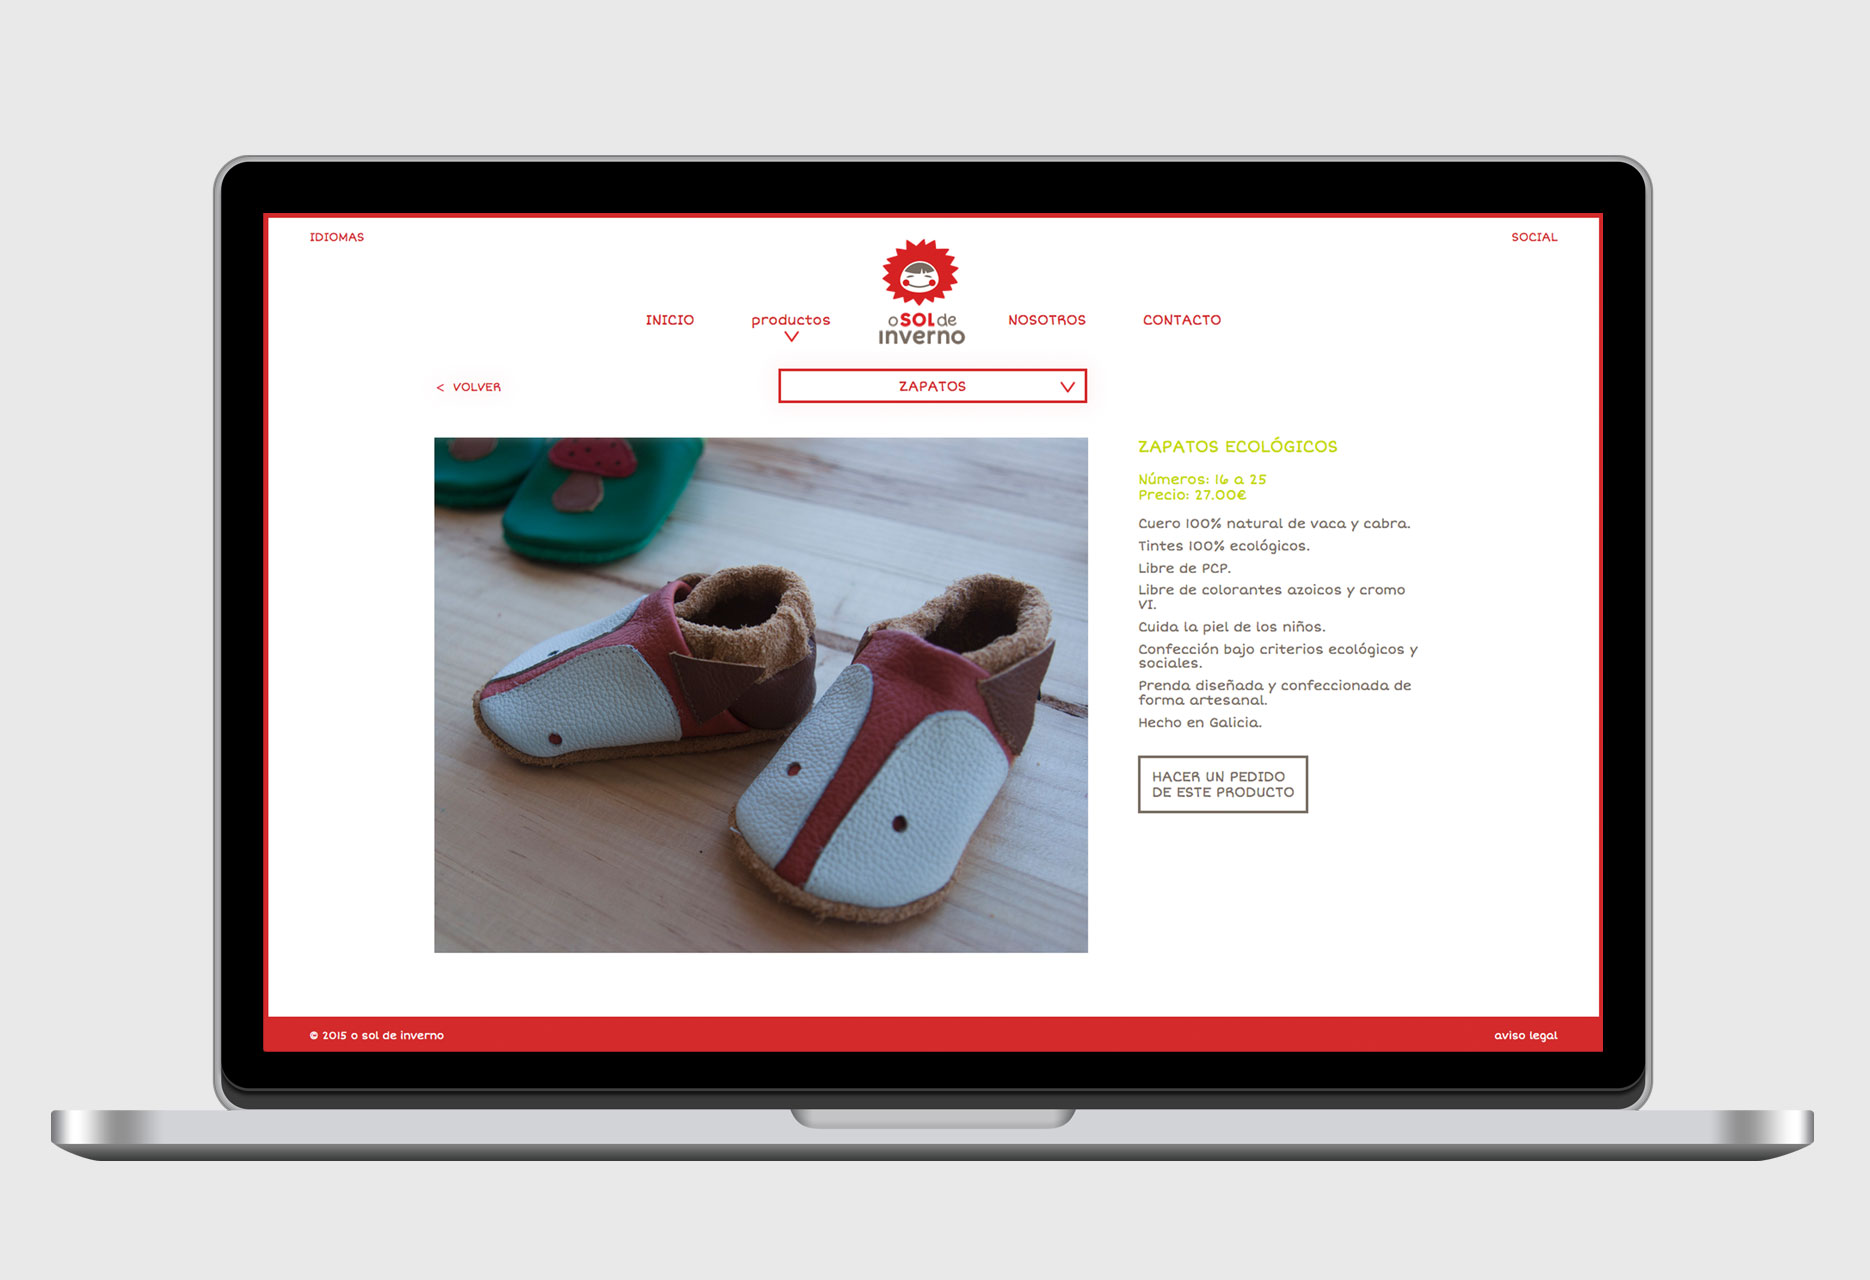 On-line store and website O sol de inverno - e-commerce / web development / responsive design / web design / CMS